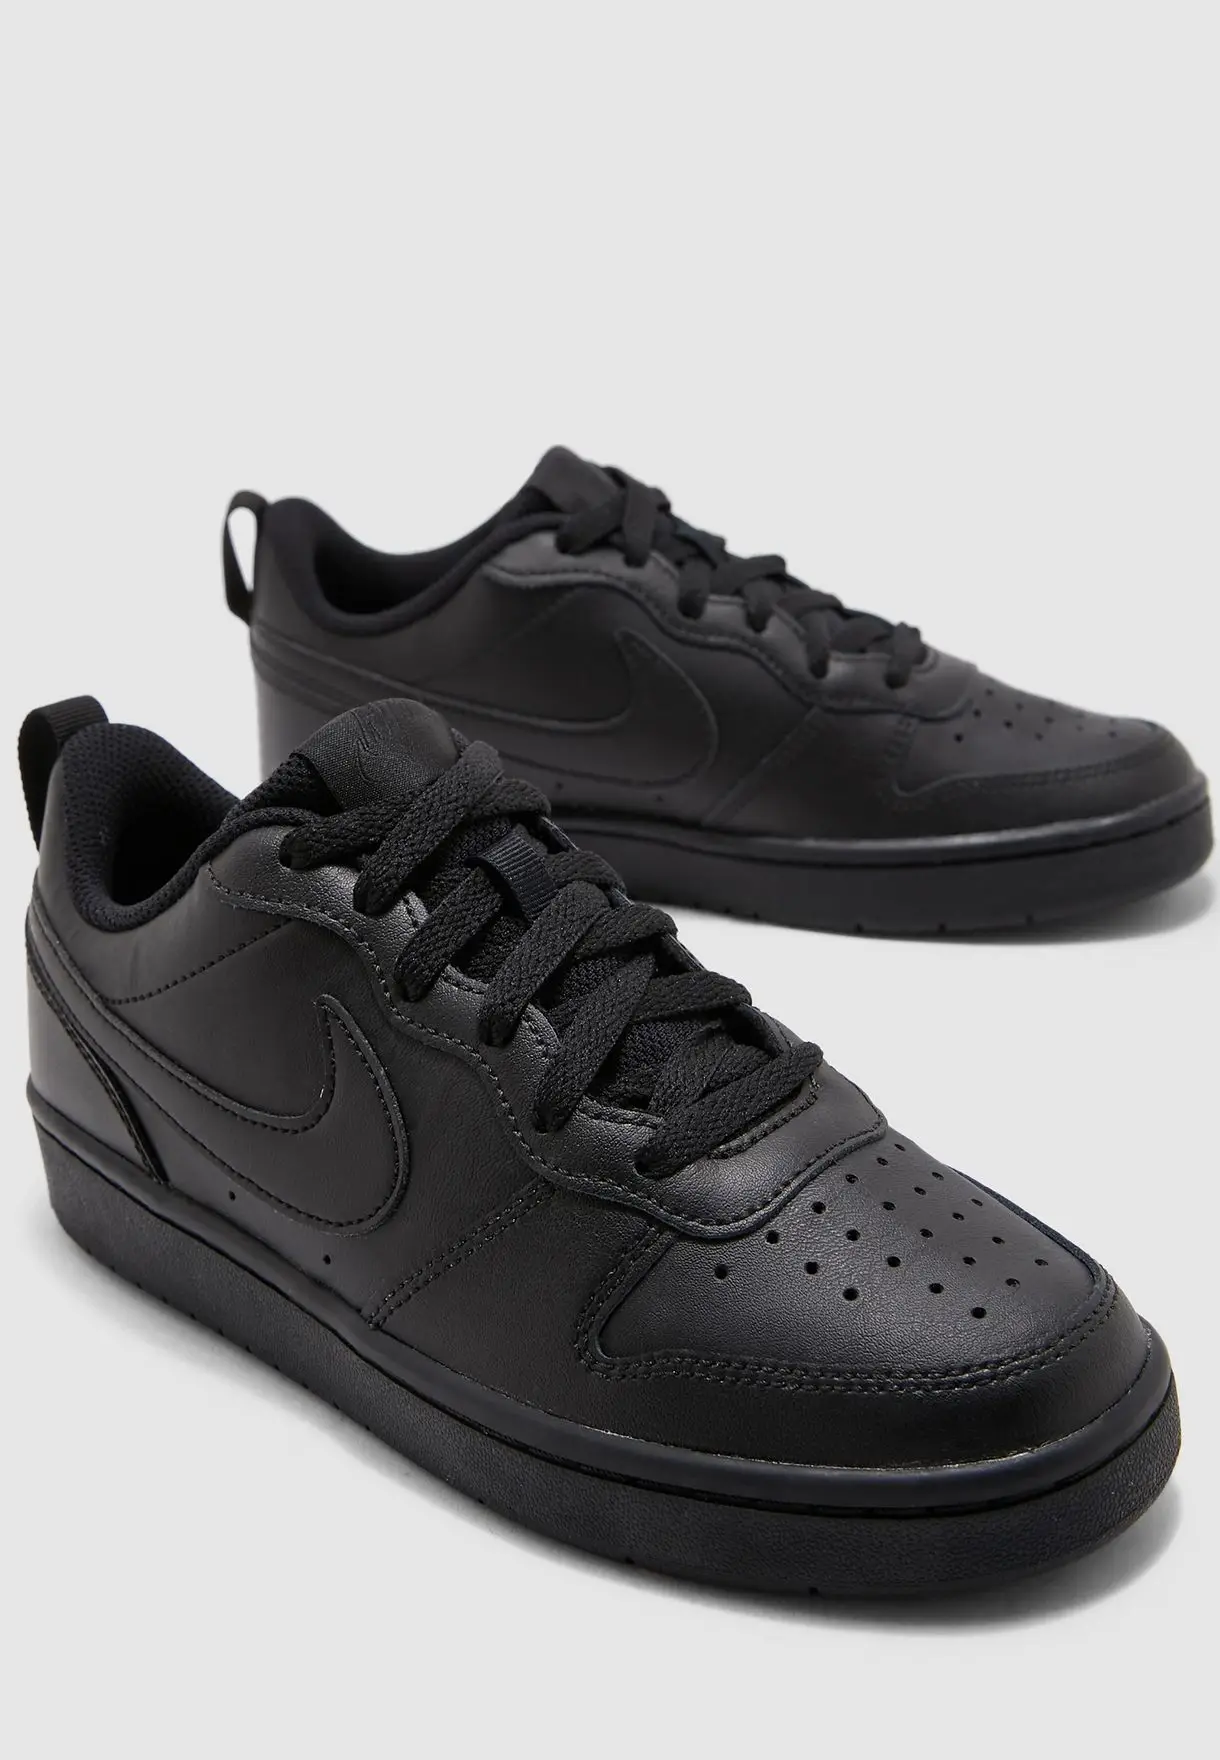 Nike Court Borough Low 2 Platform Sneakers Flat Men Women vulcanize Slip on Air non-leather Casual Running Gym Shoes Footwear